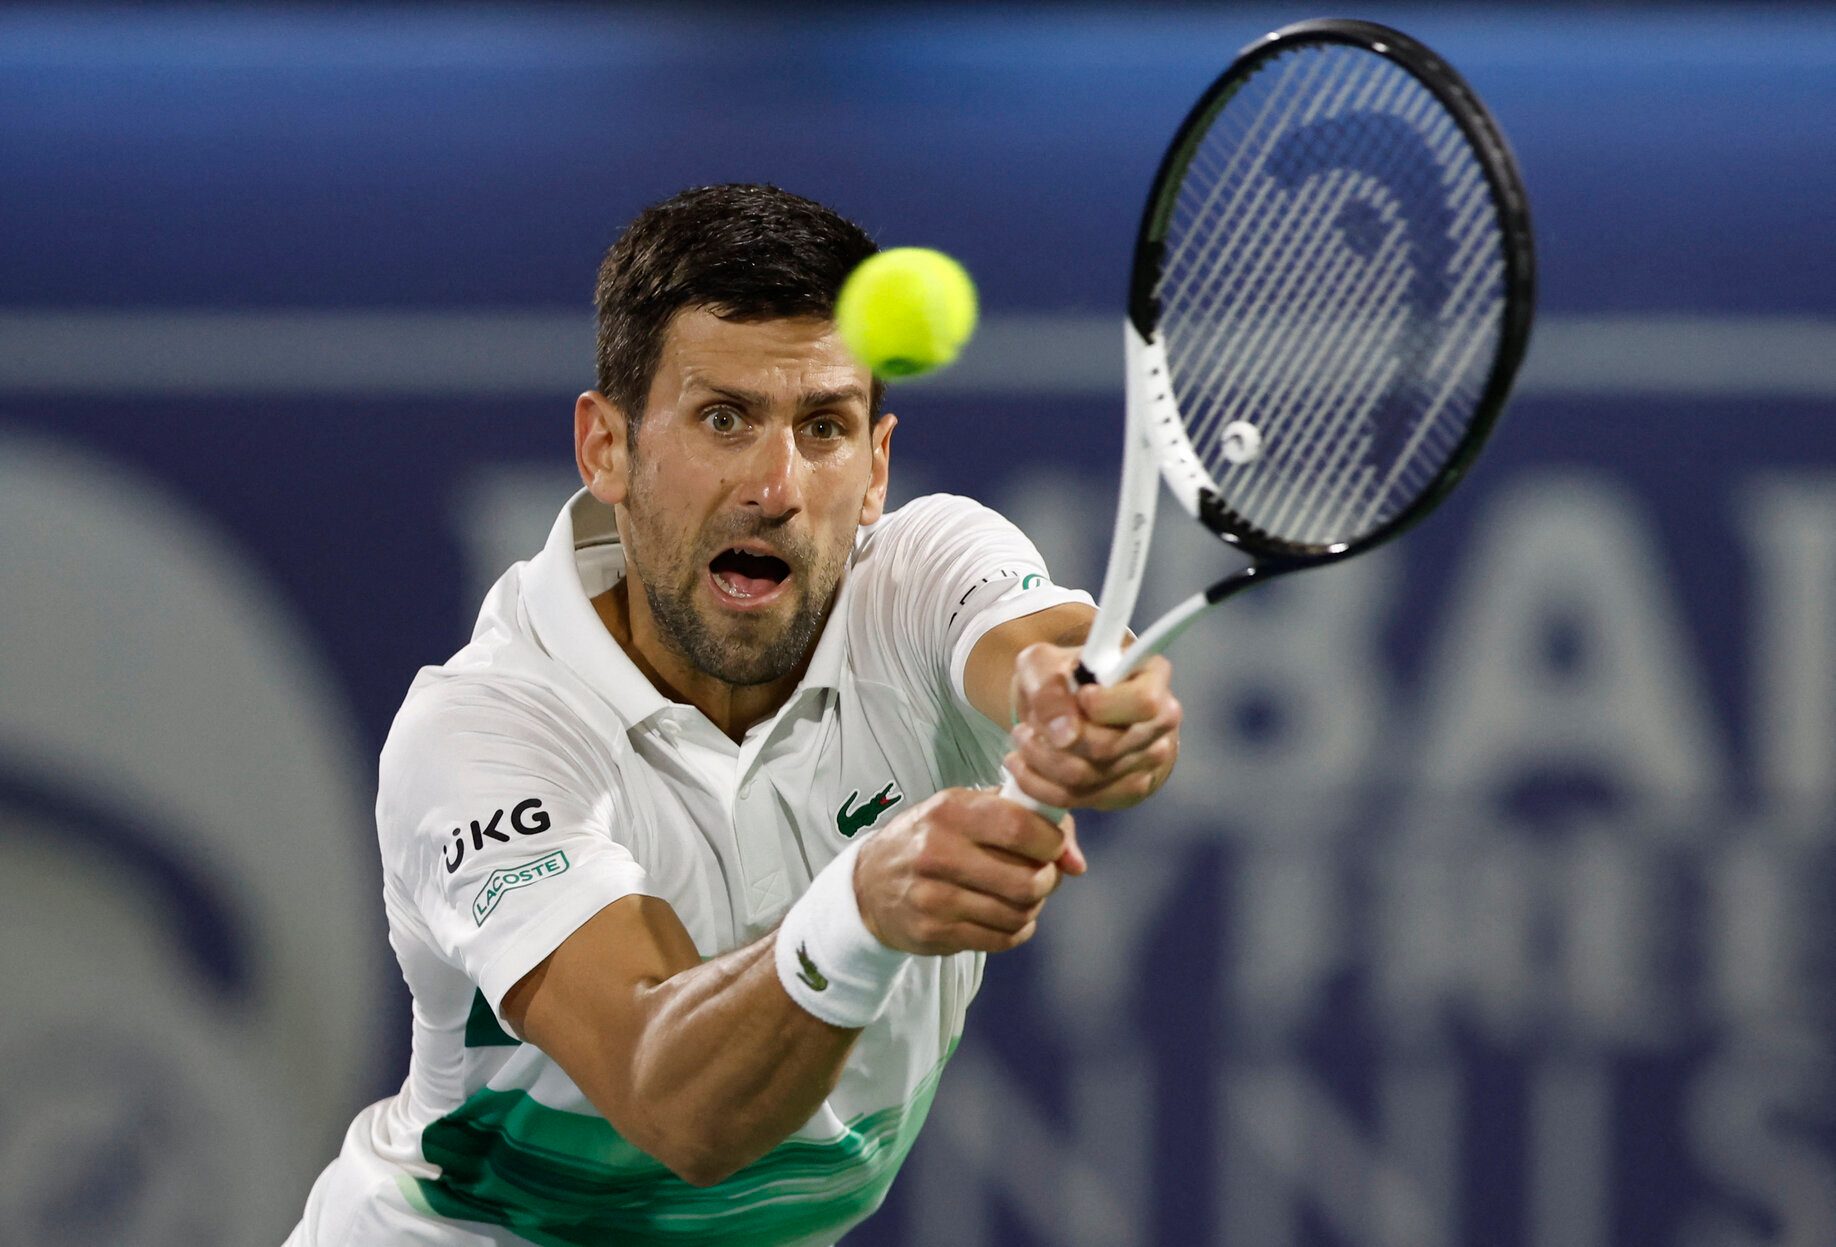 Djokovic to lose top ranking after upset defeat in Dubai